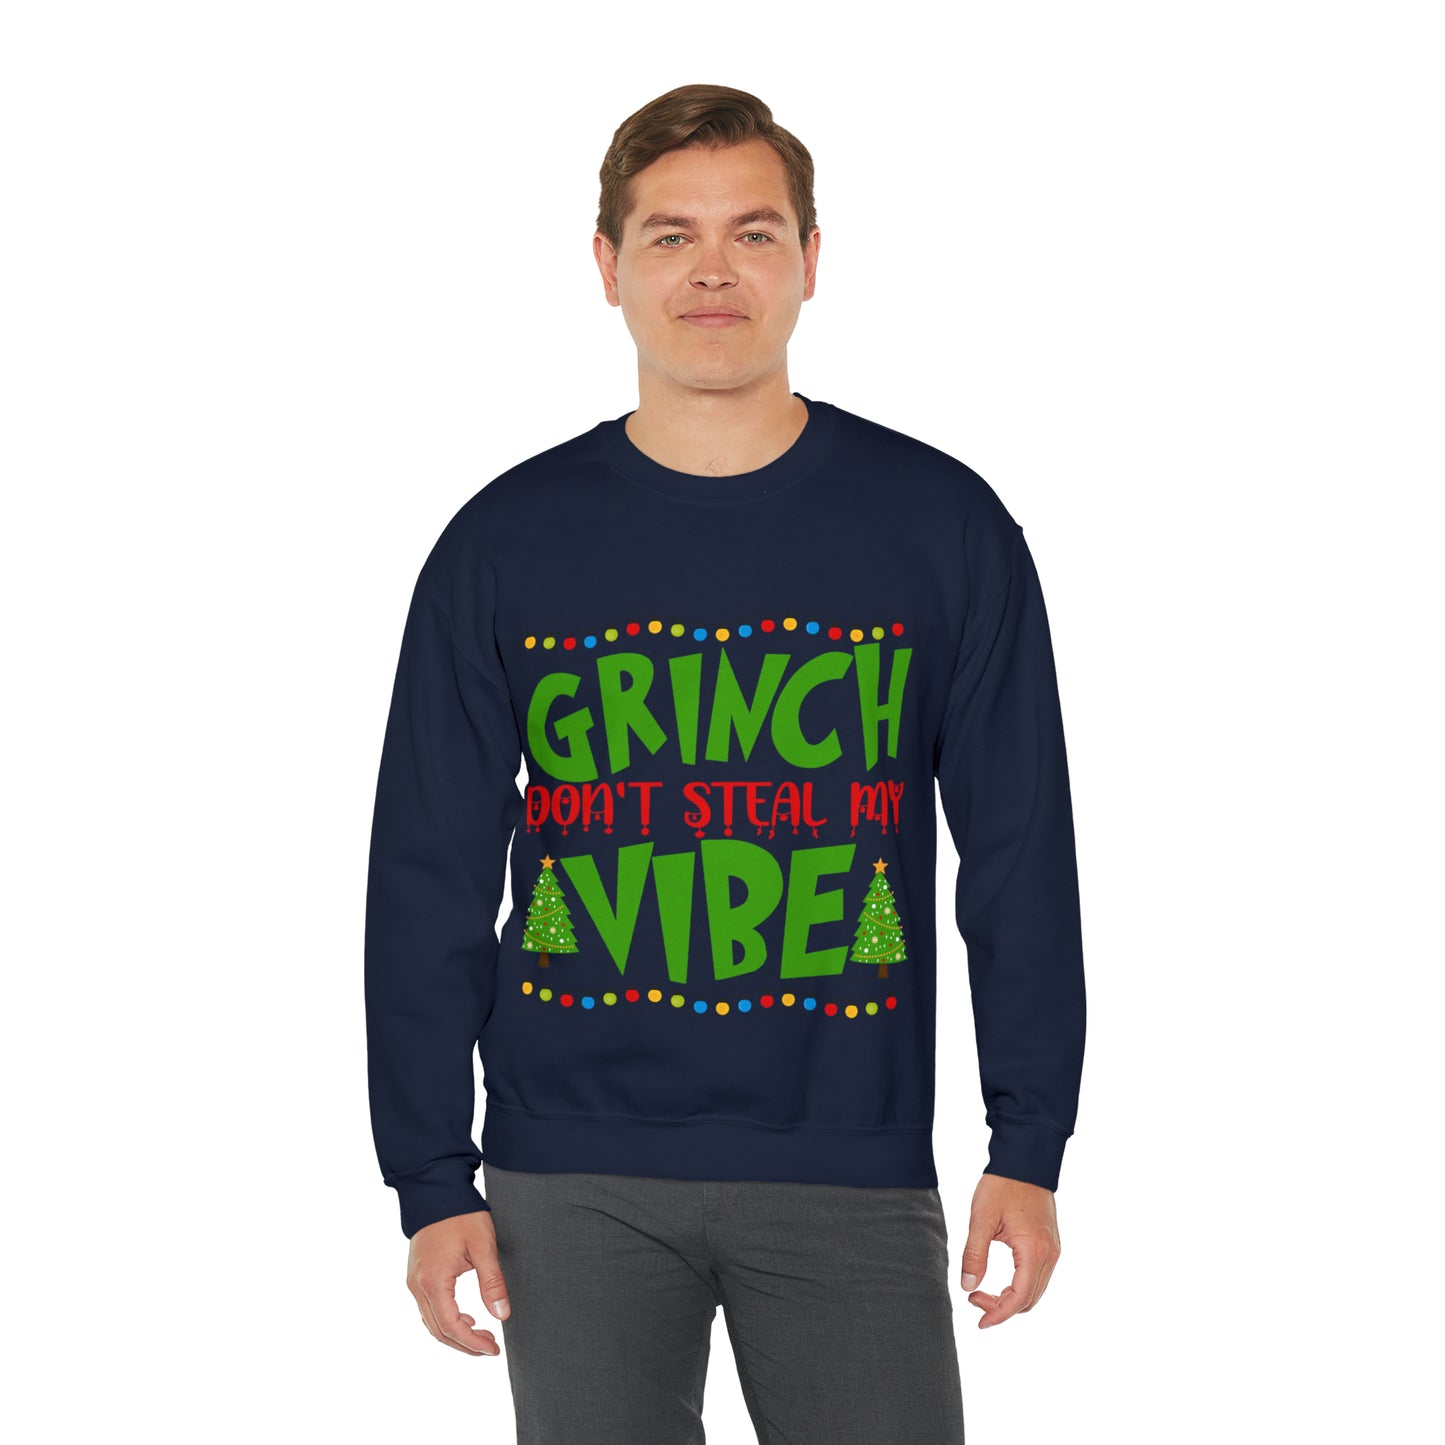 Grinch Sweatshirt 6